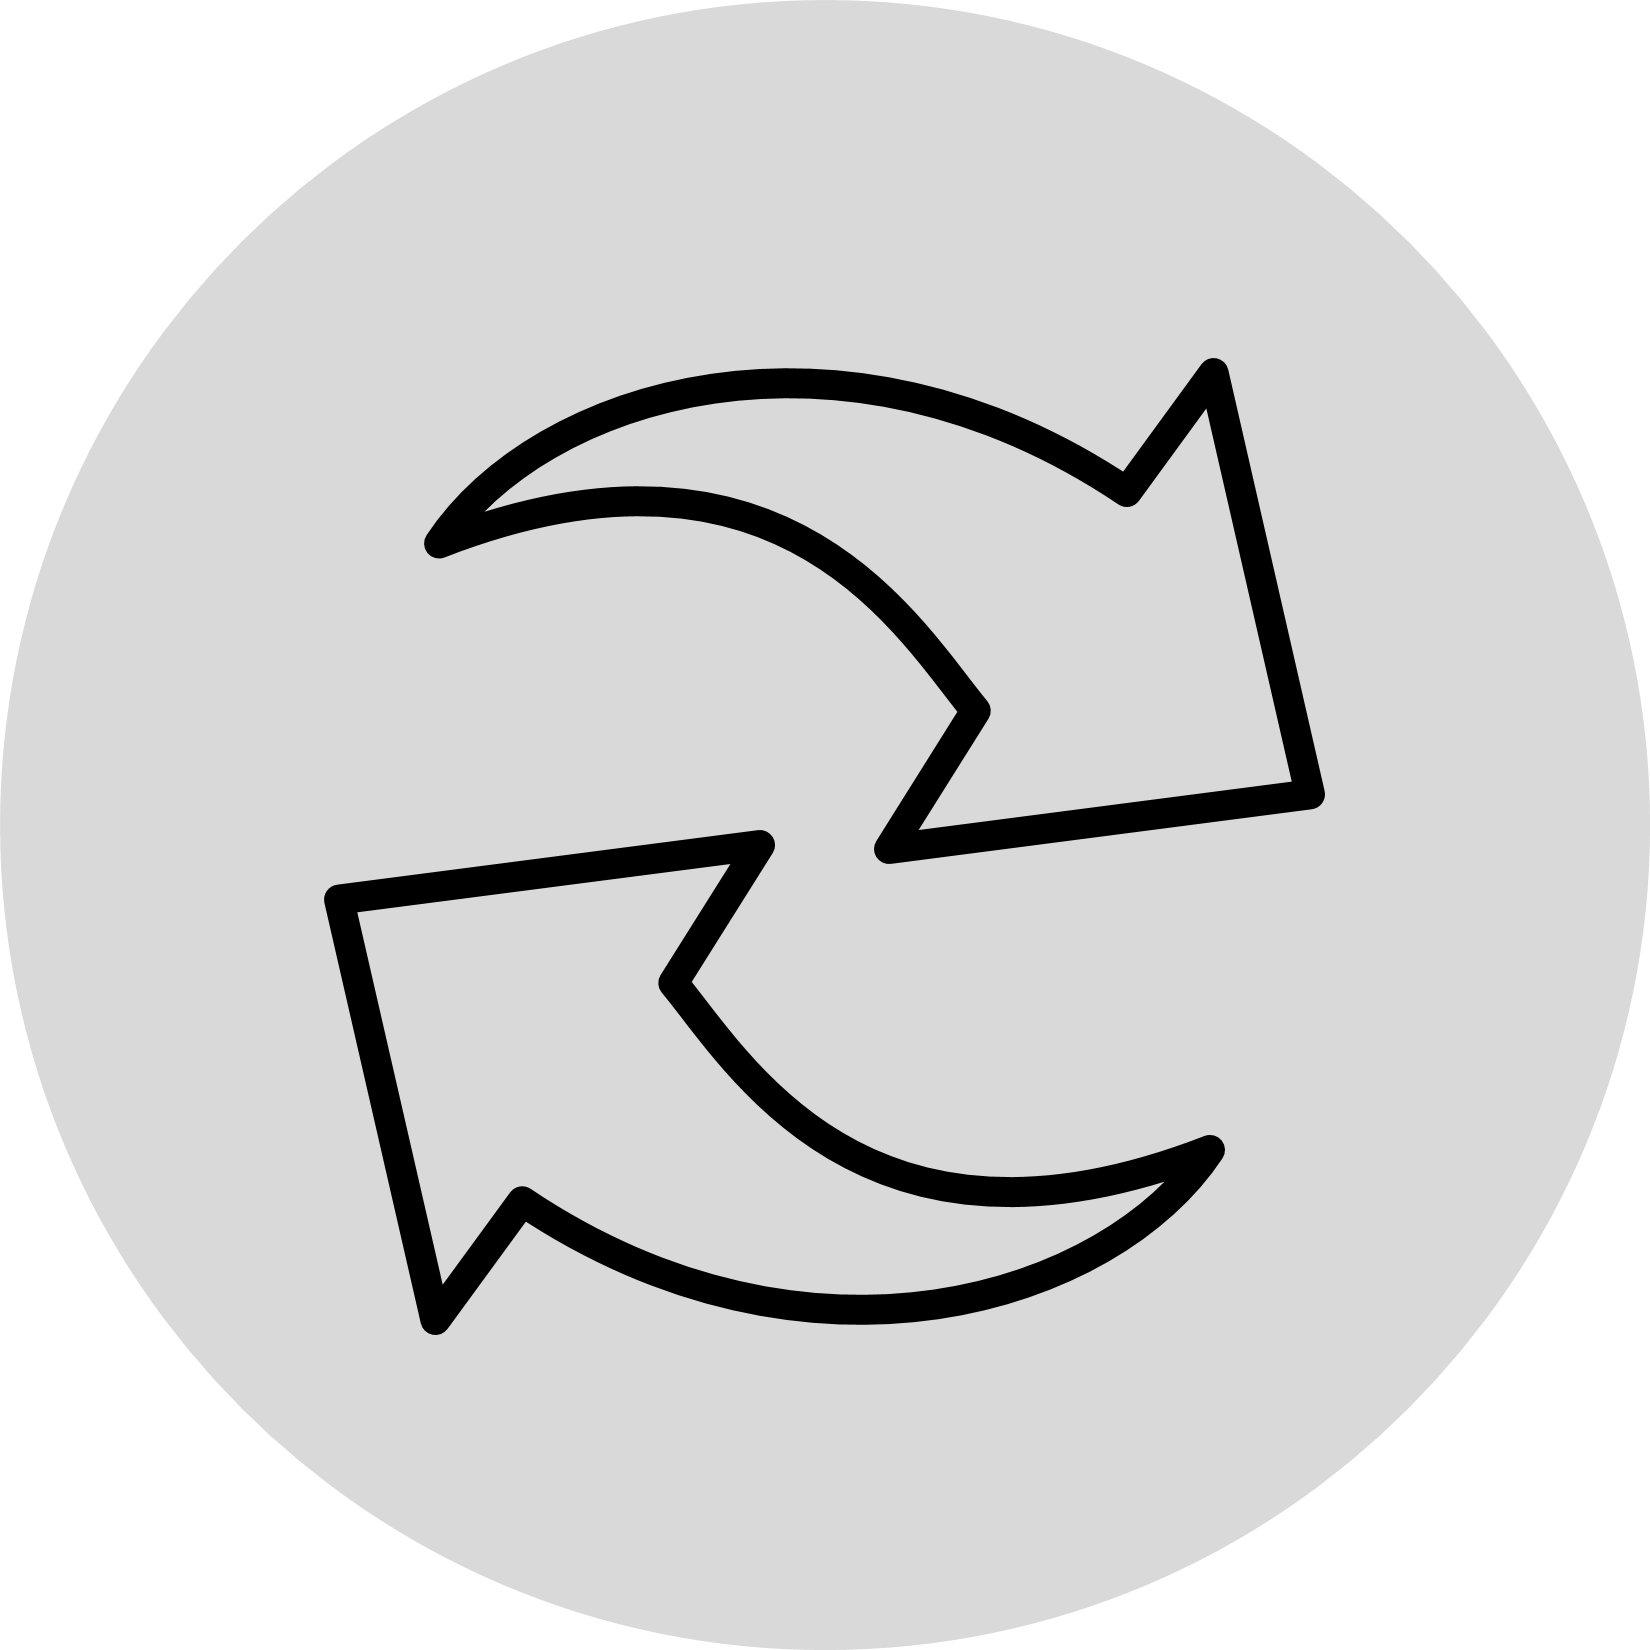 Two arrow line icons representing circular economy